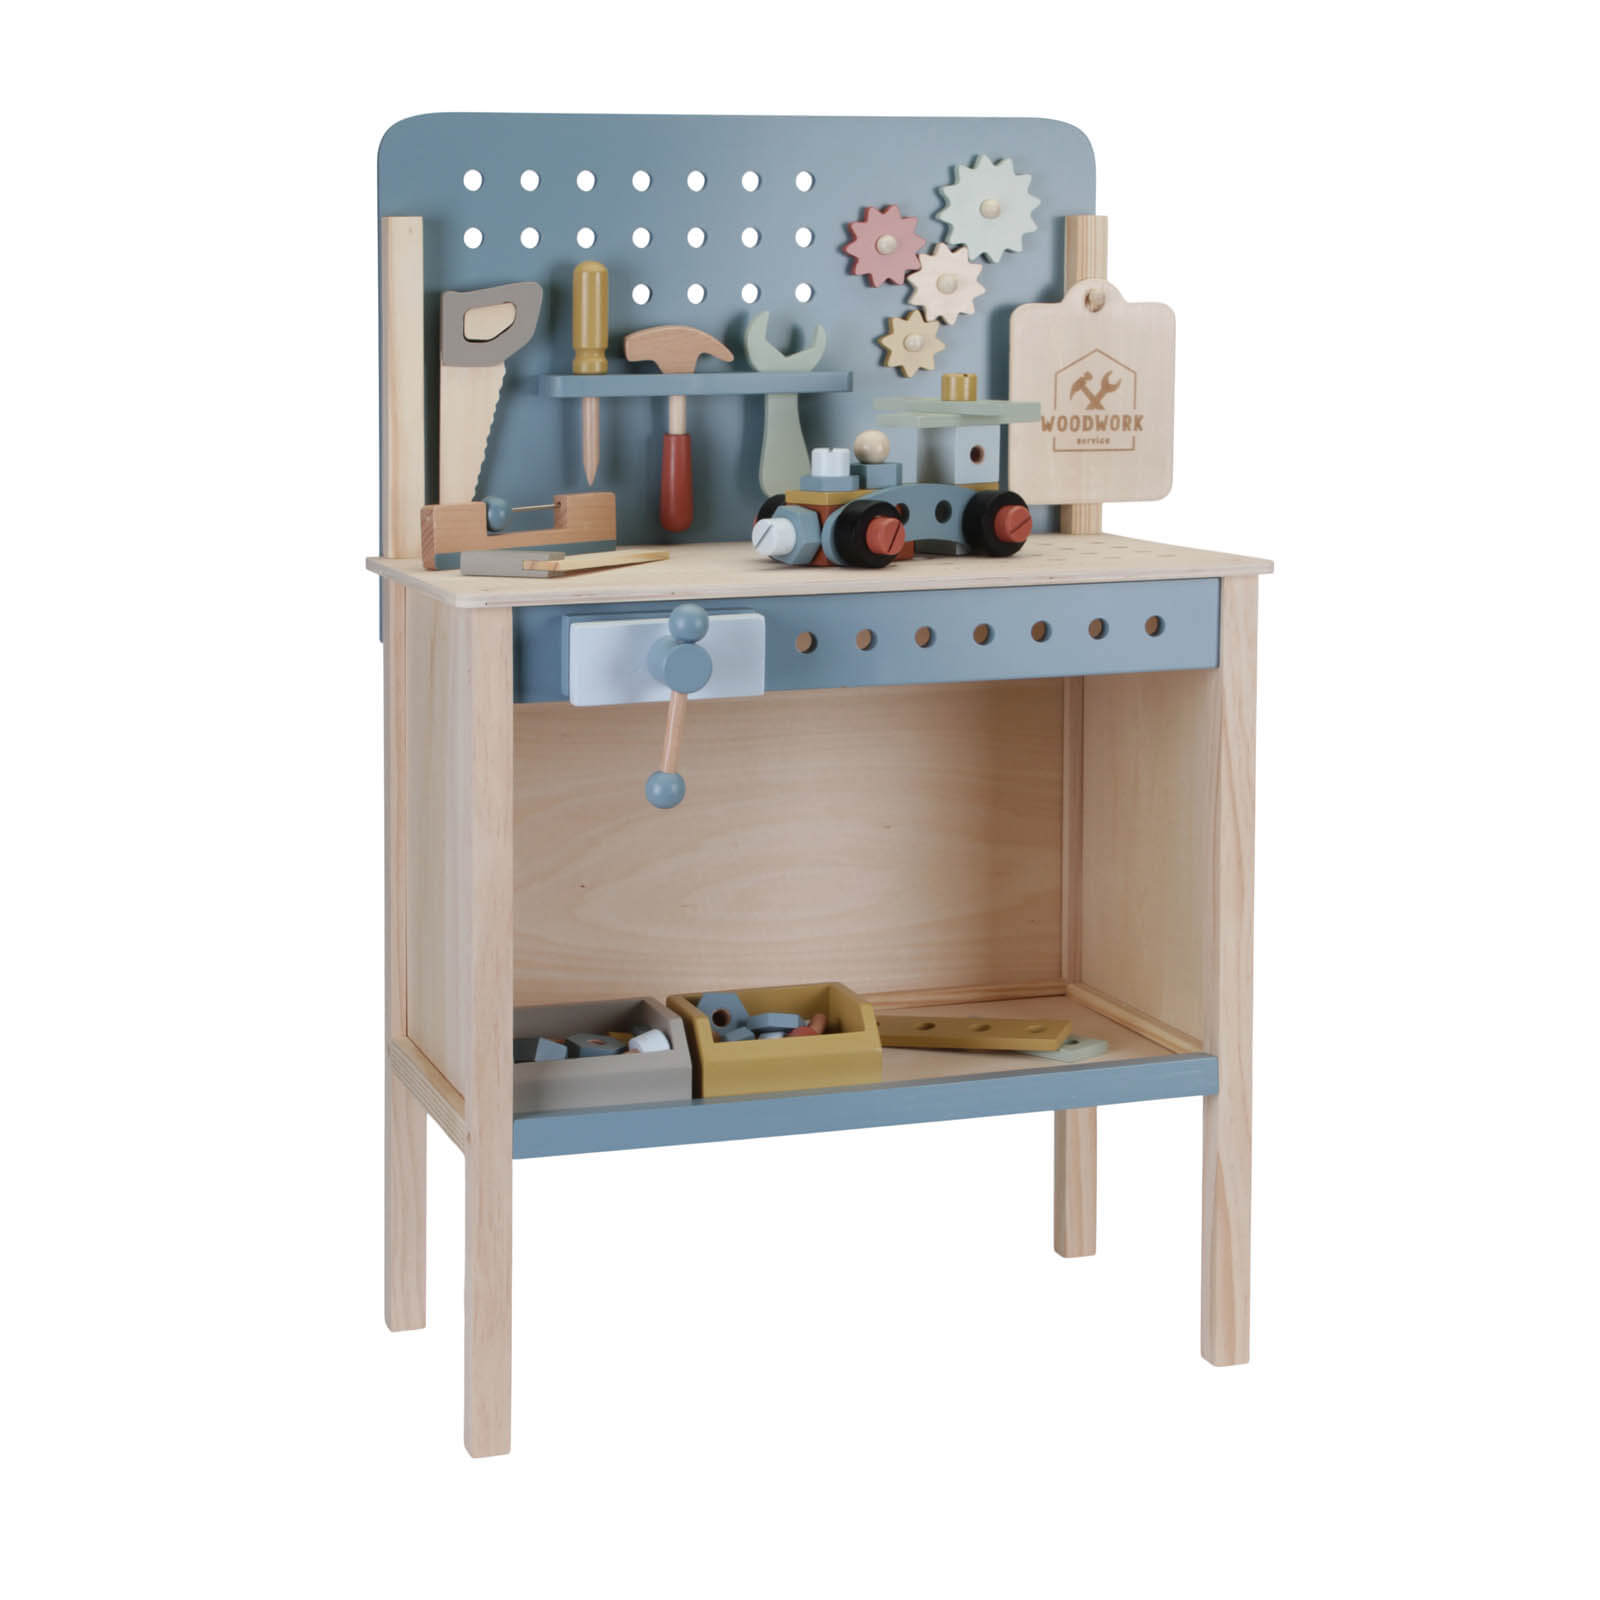 Mini workbench  Shop at Little Dutch - Little Dutch